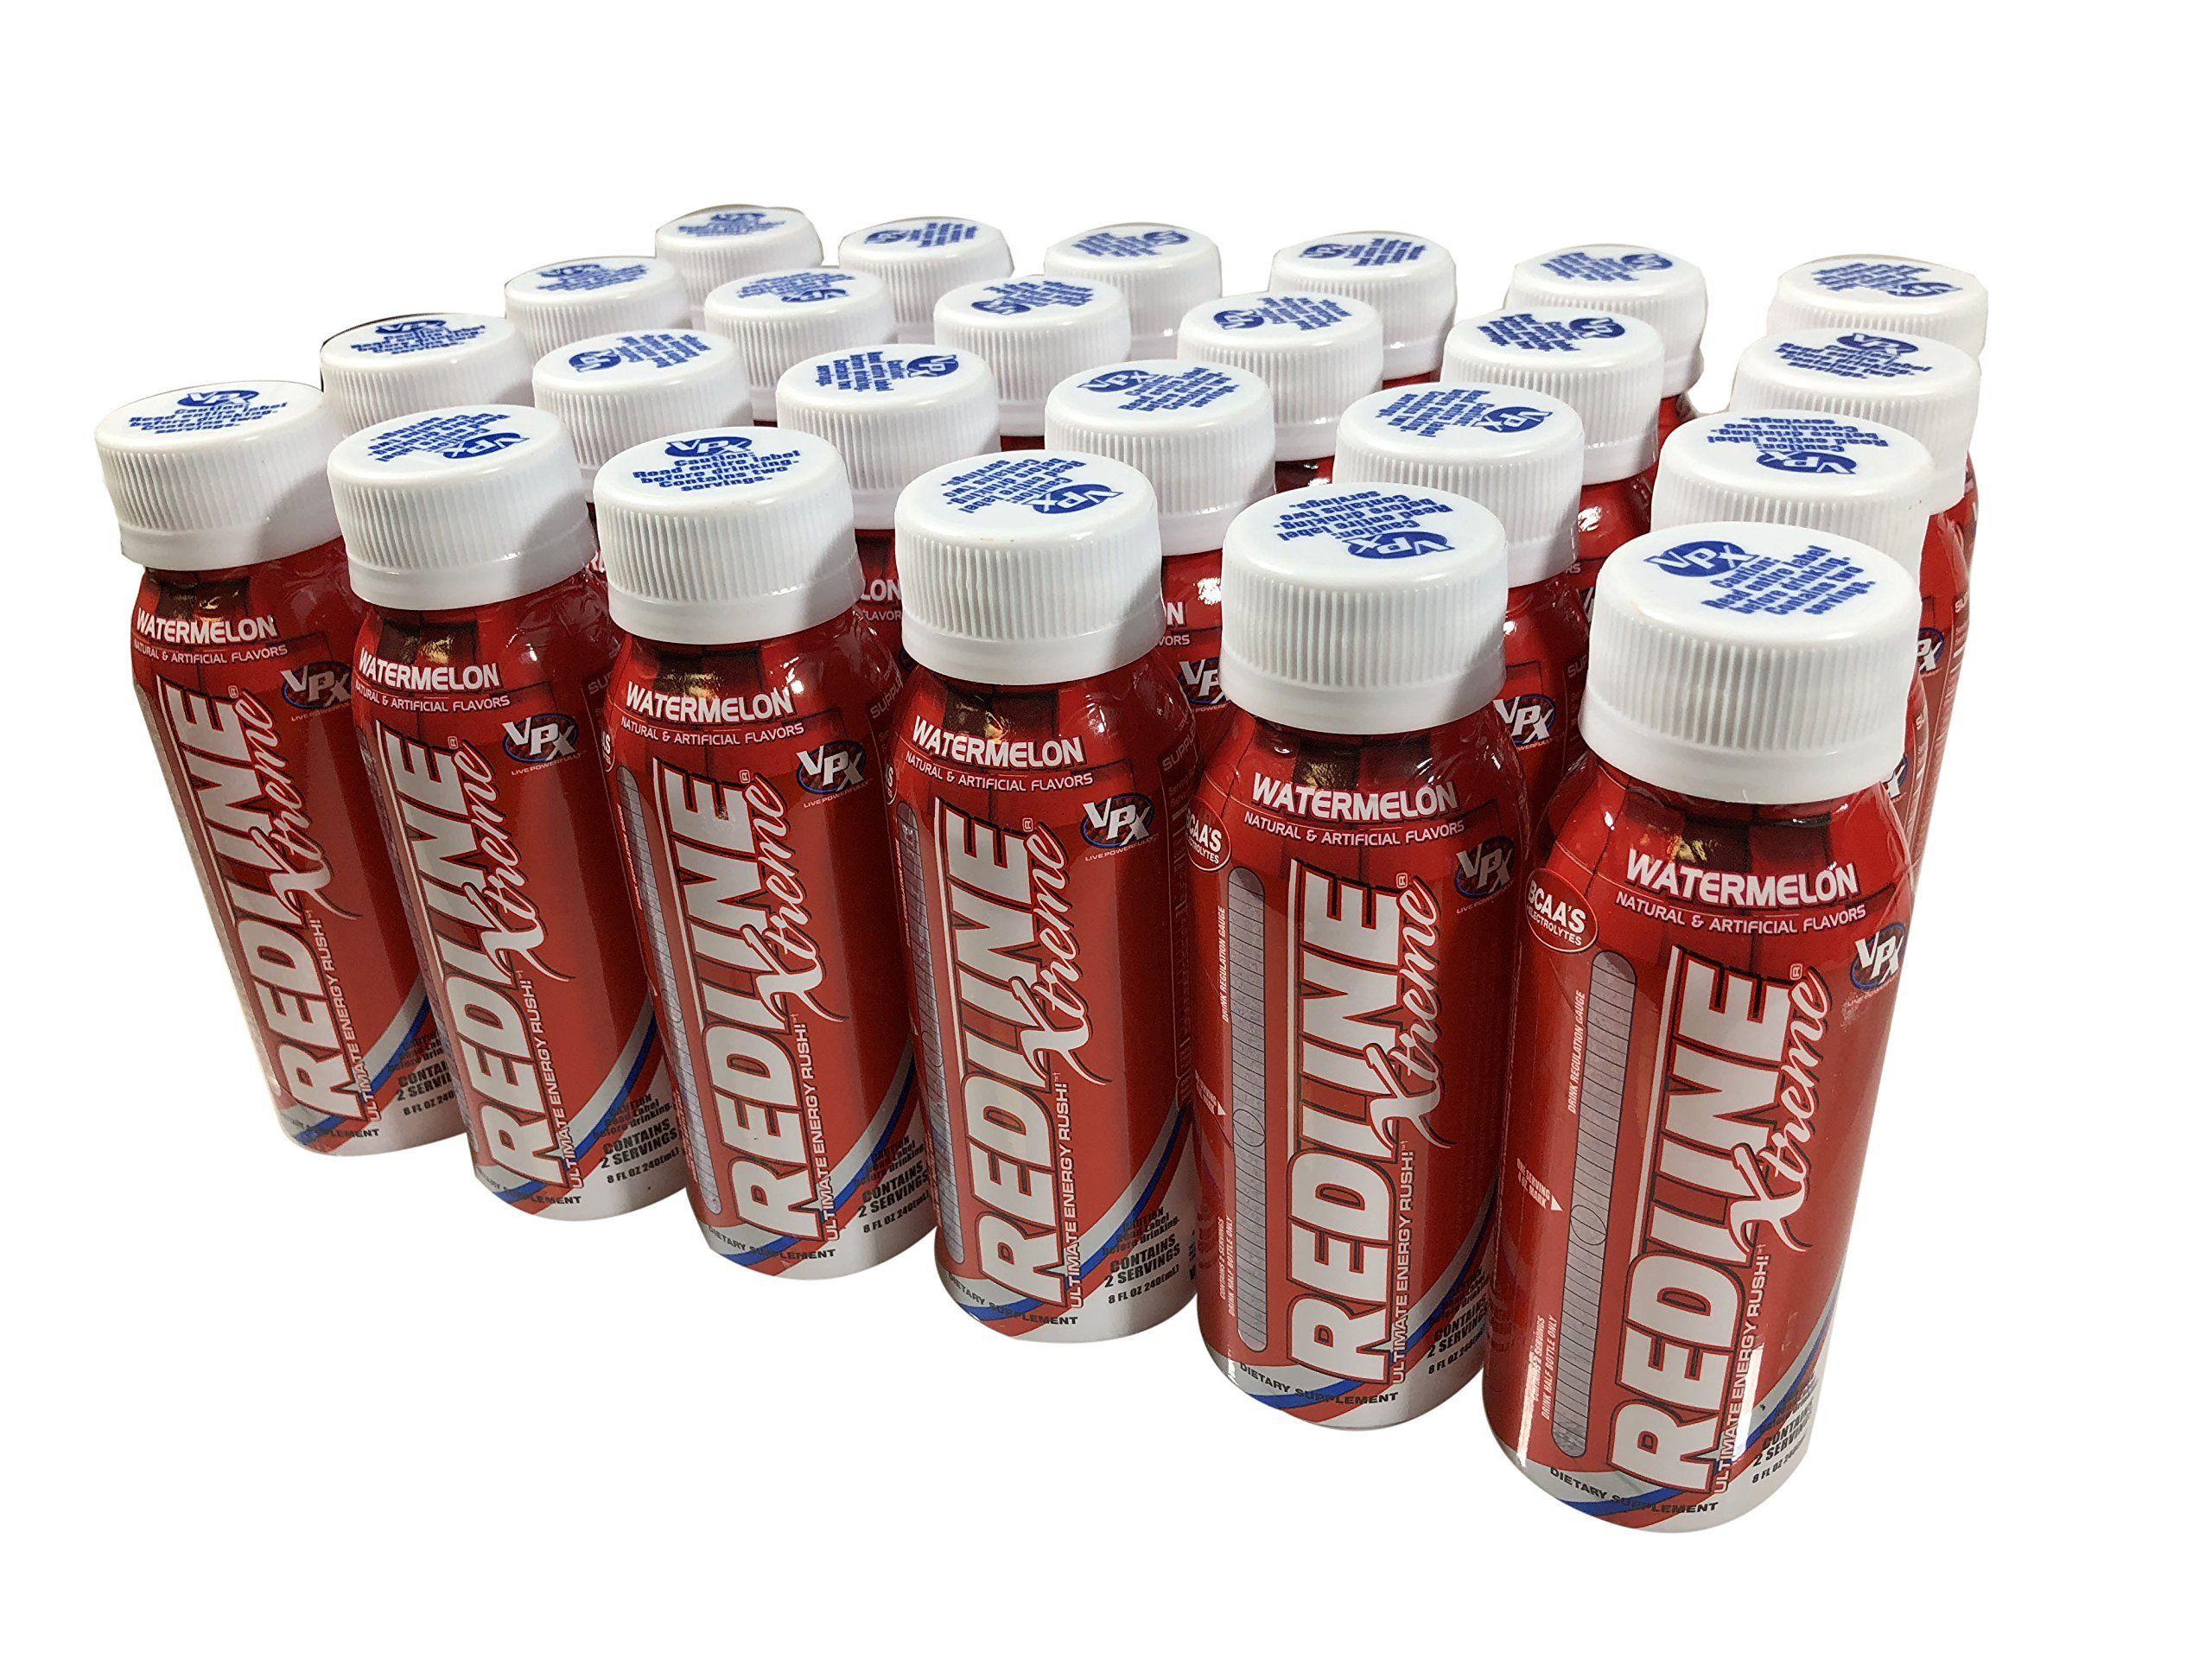 redline energy drink can